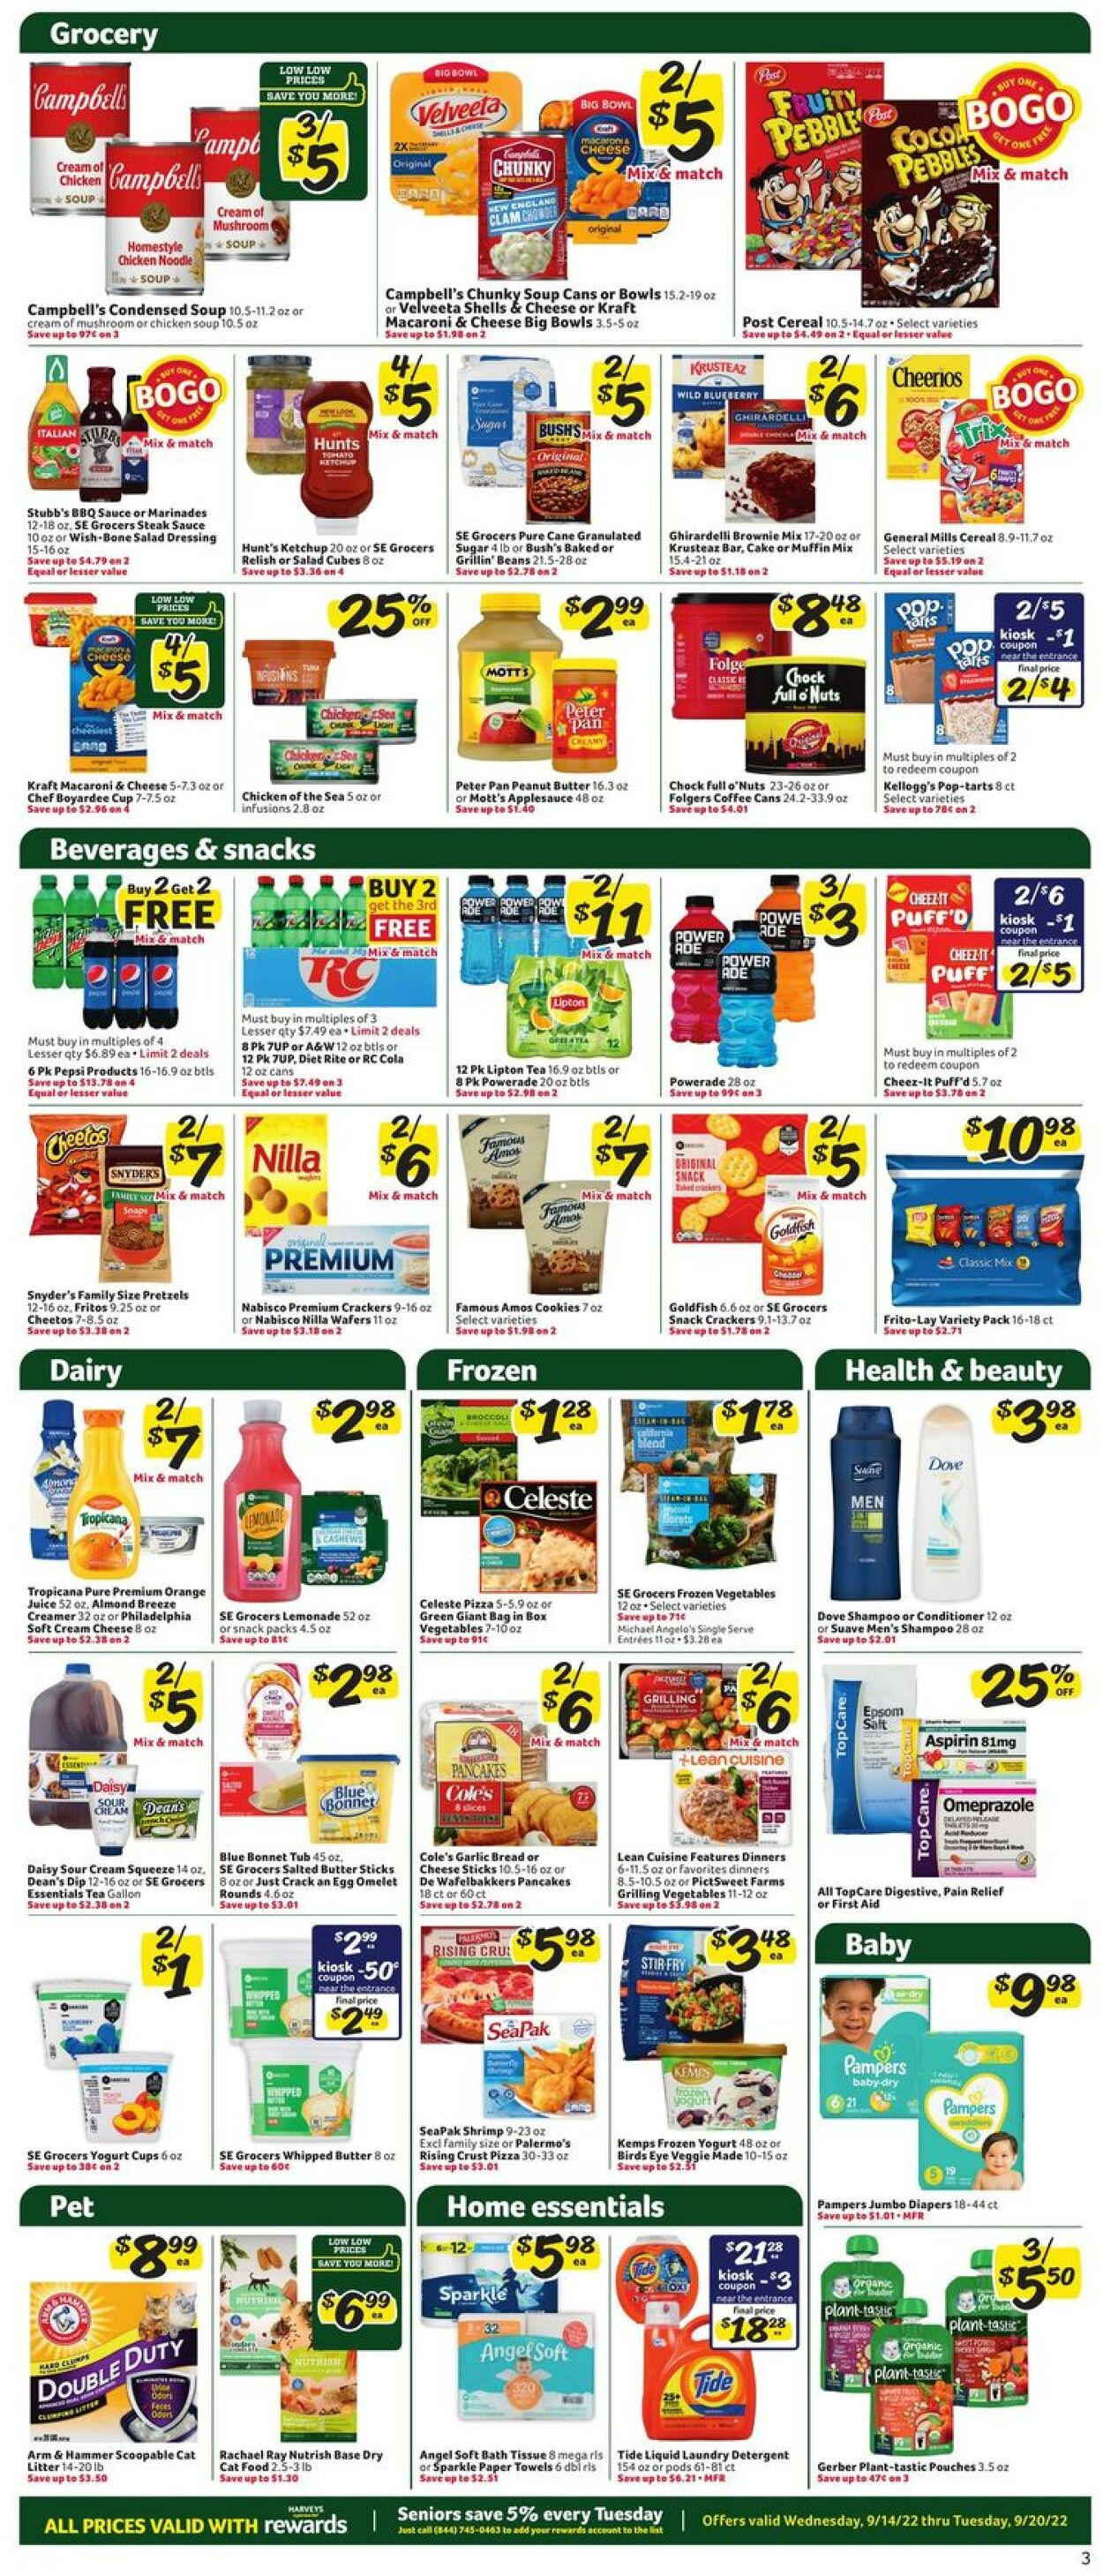 Weekly ad Harvey's Supermarkets 09/14/2022 - 09/20/2022